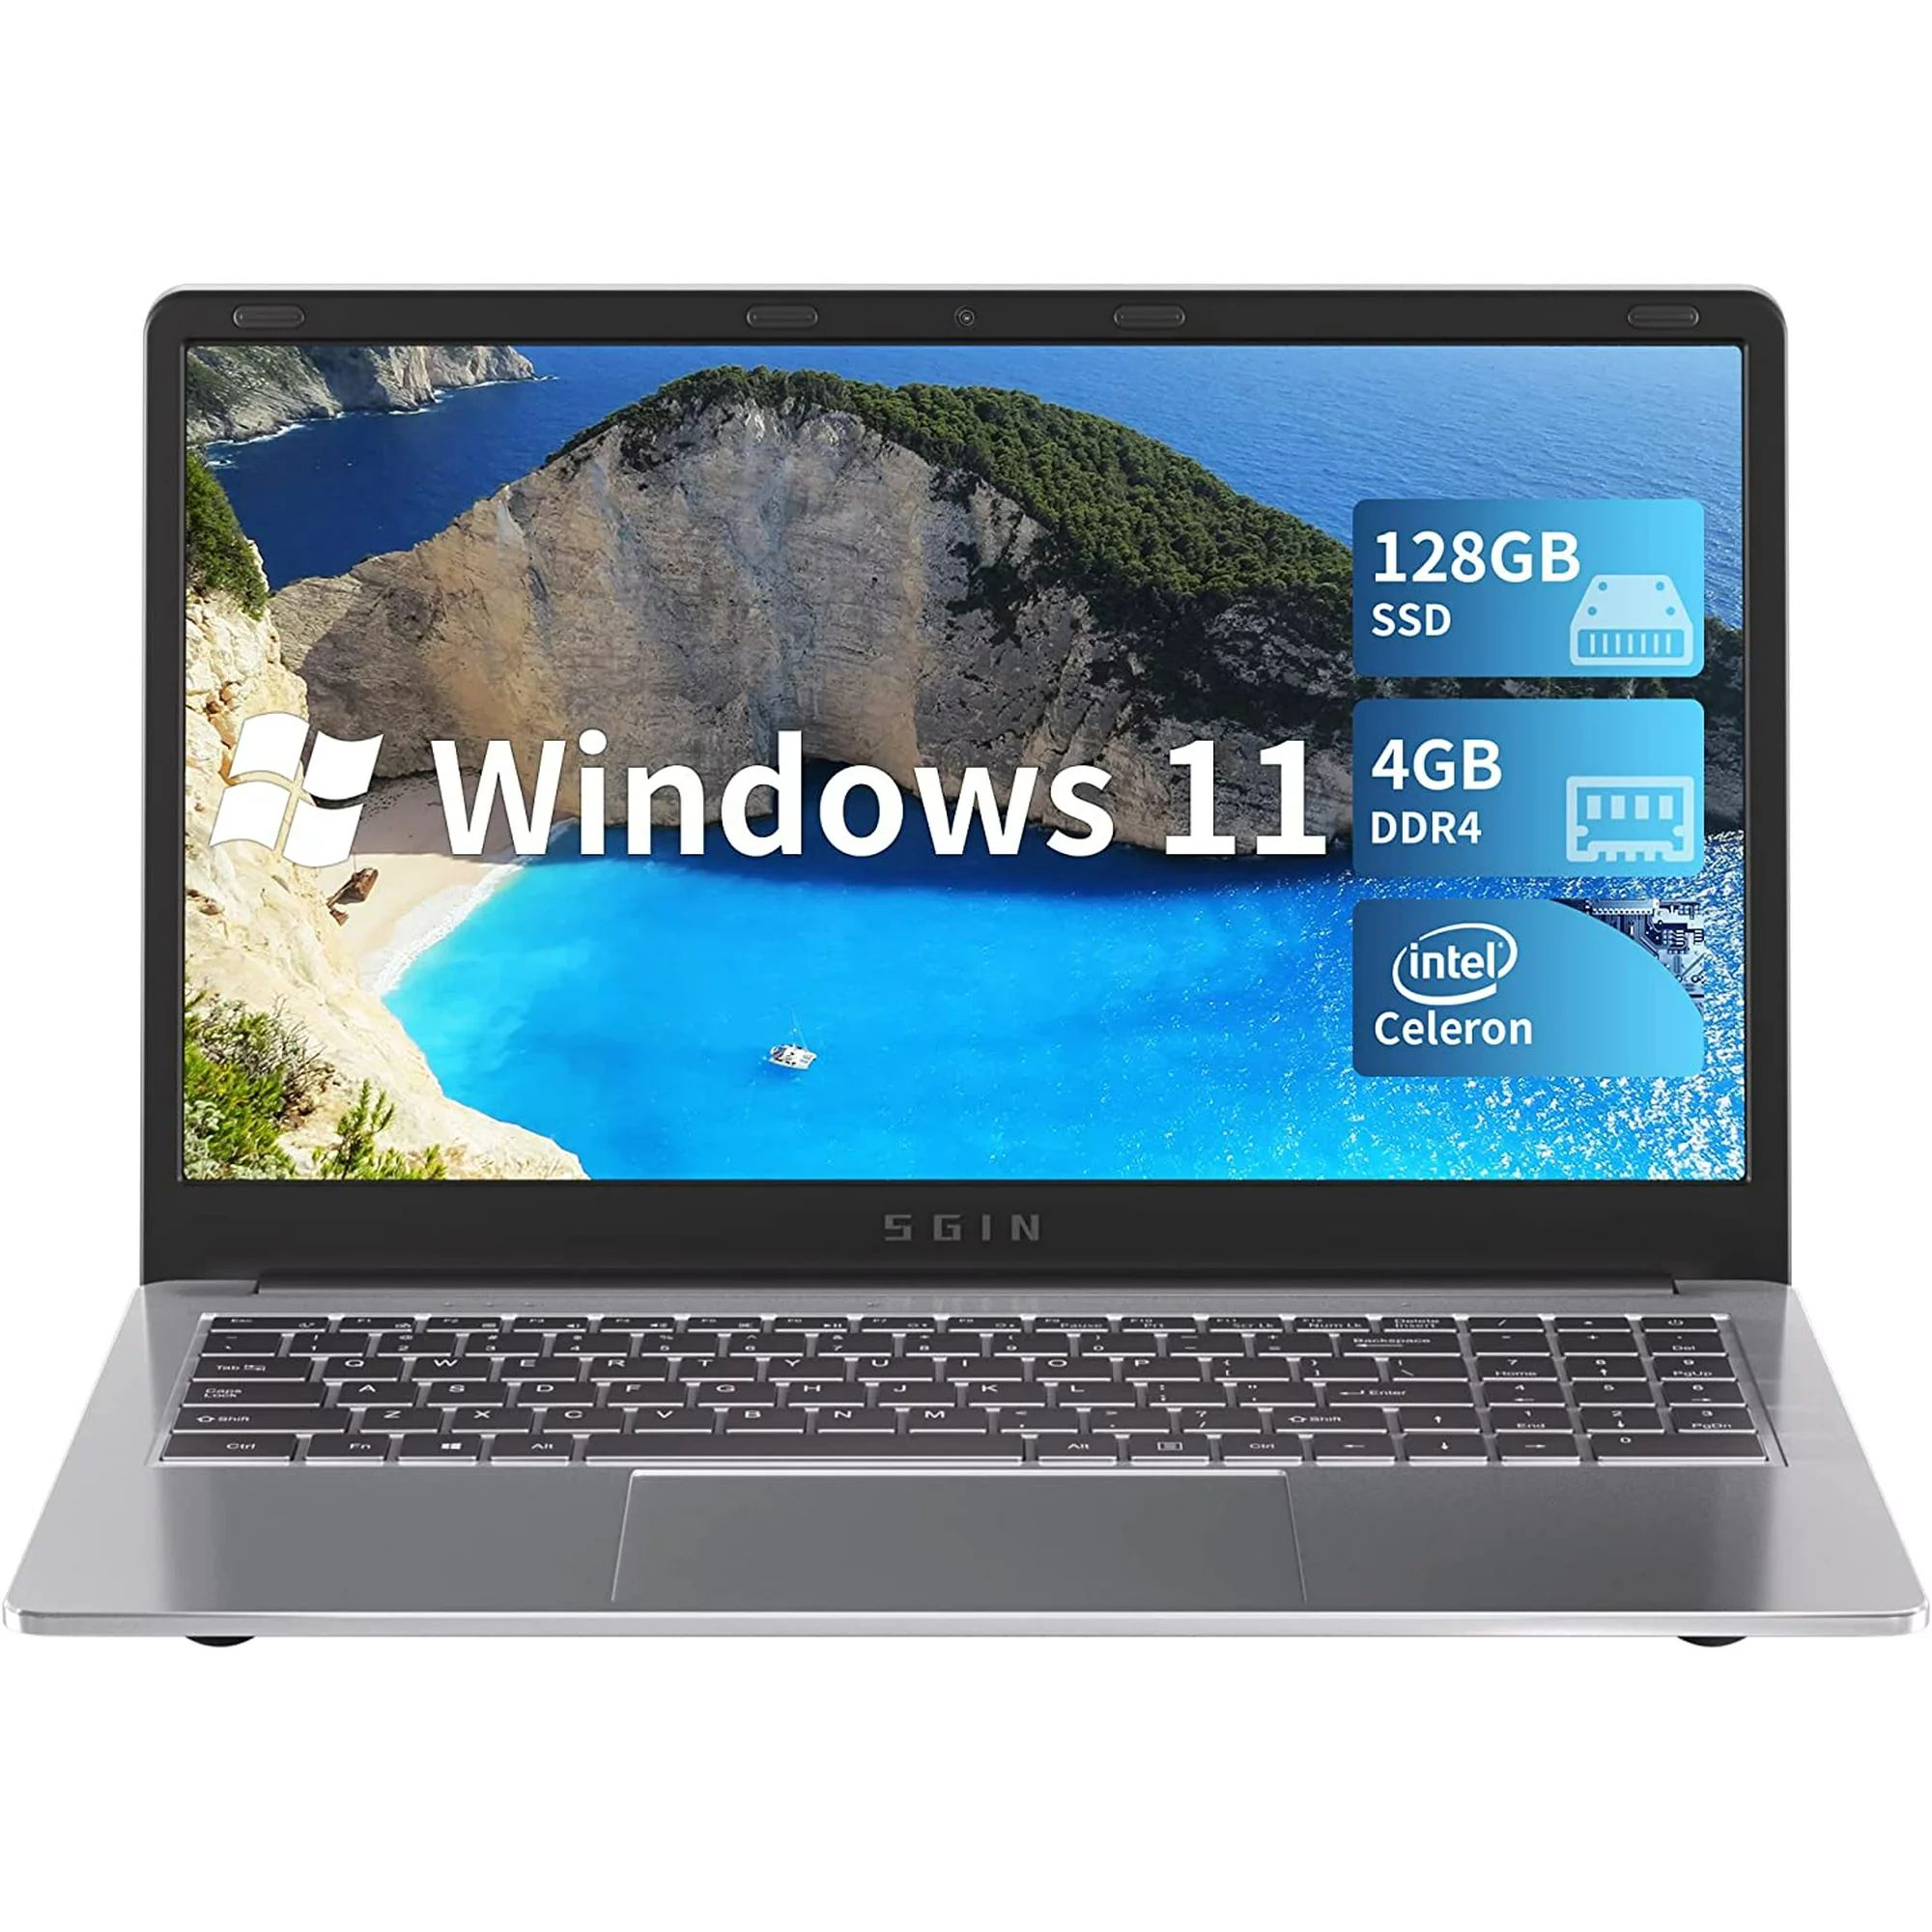 SGIN 15.6inch Laptop 4GB DDR4 128GB SSD Windows 11 with 4 Core Intel Celeron, Full HD 1920x1080 | Walmart (US)